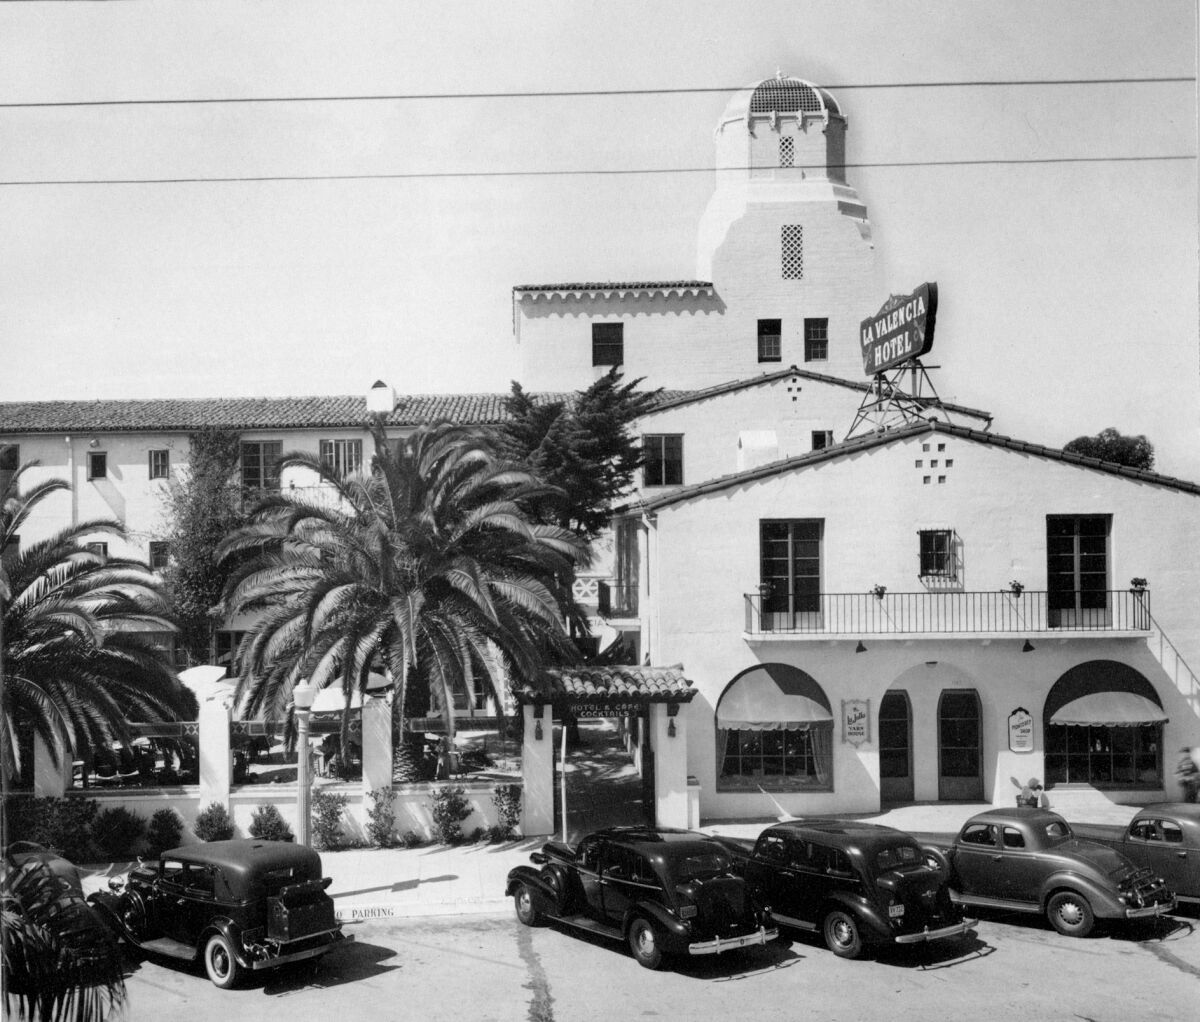 La Valencia Hotel, pictured in 1937, opened in 1926.